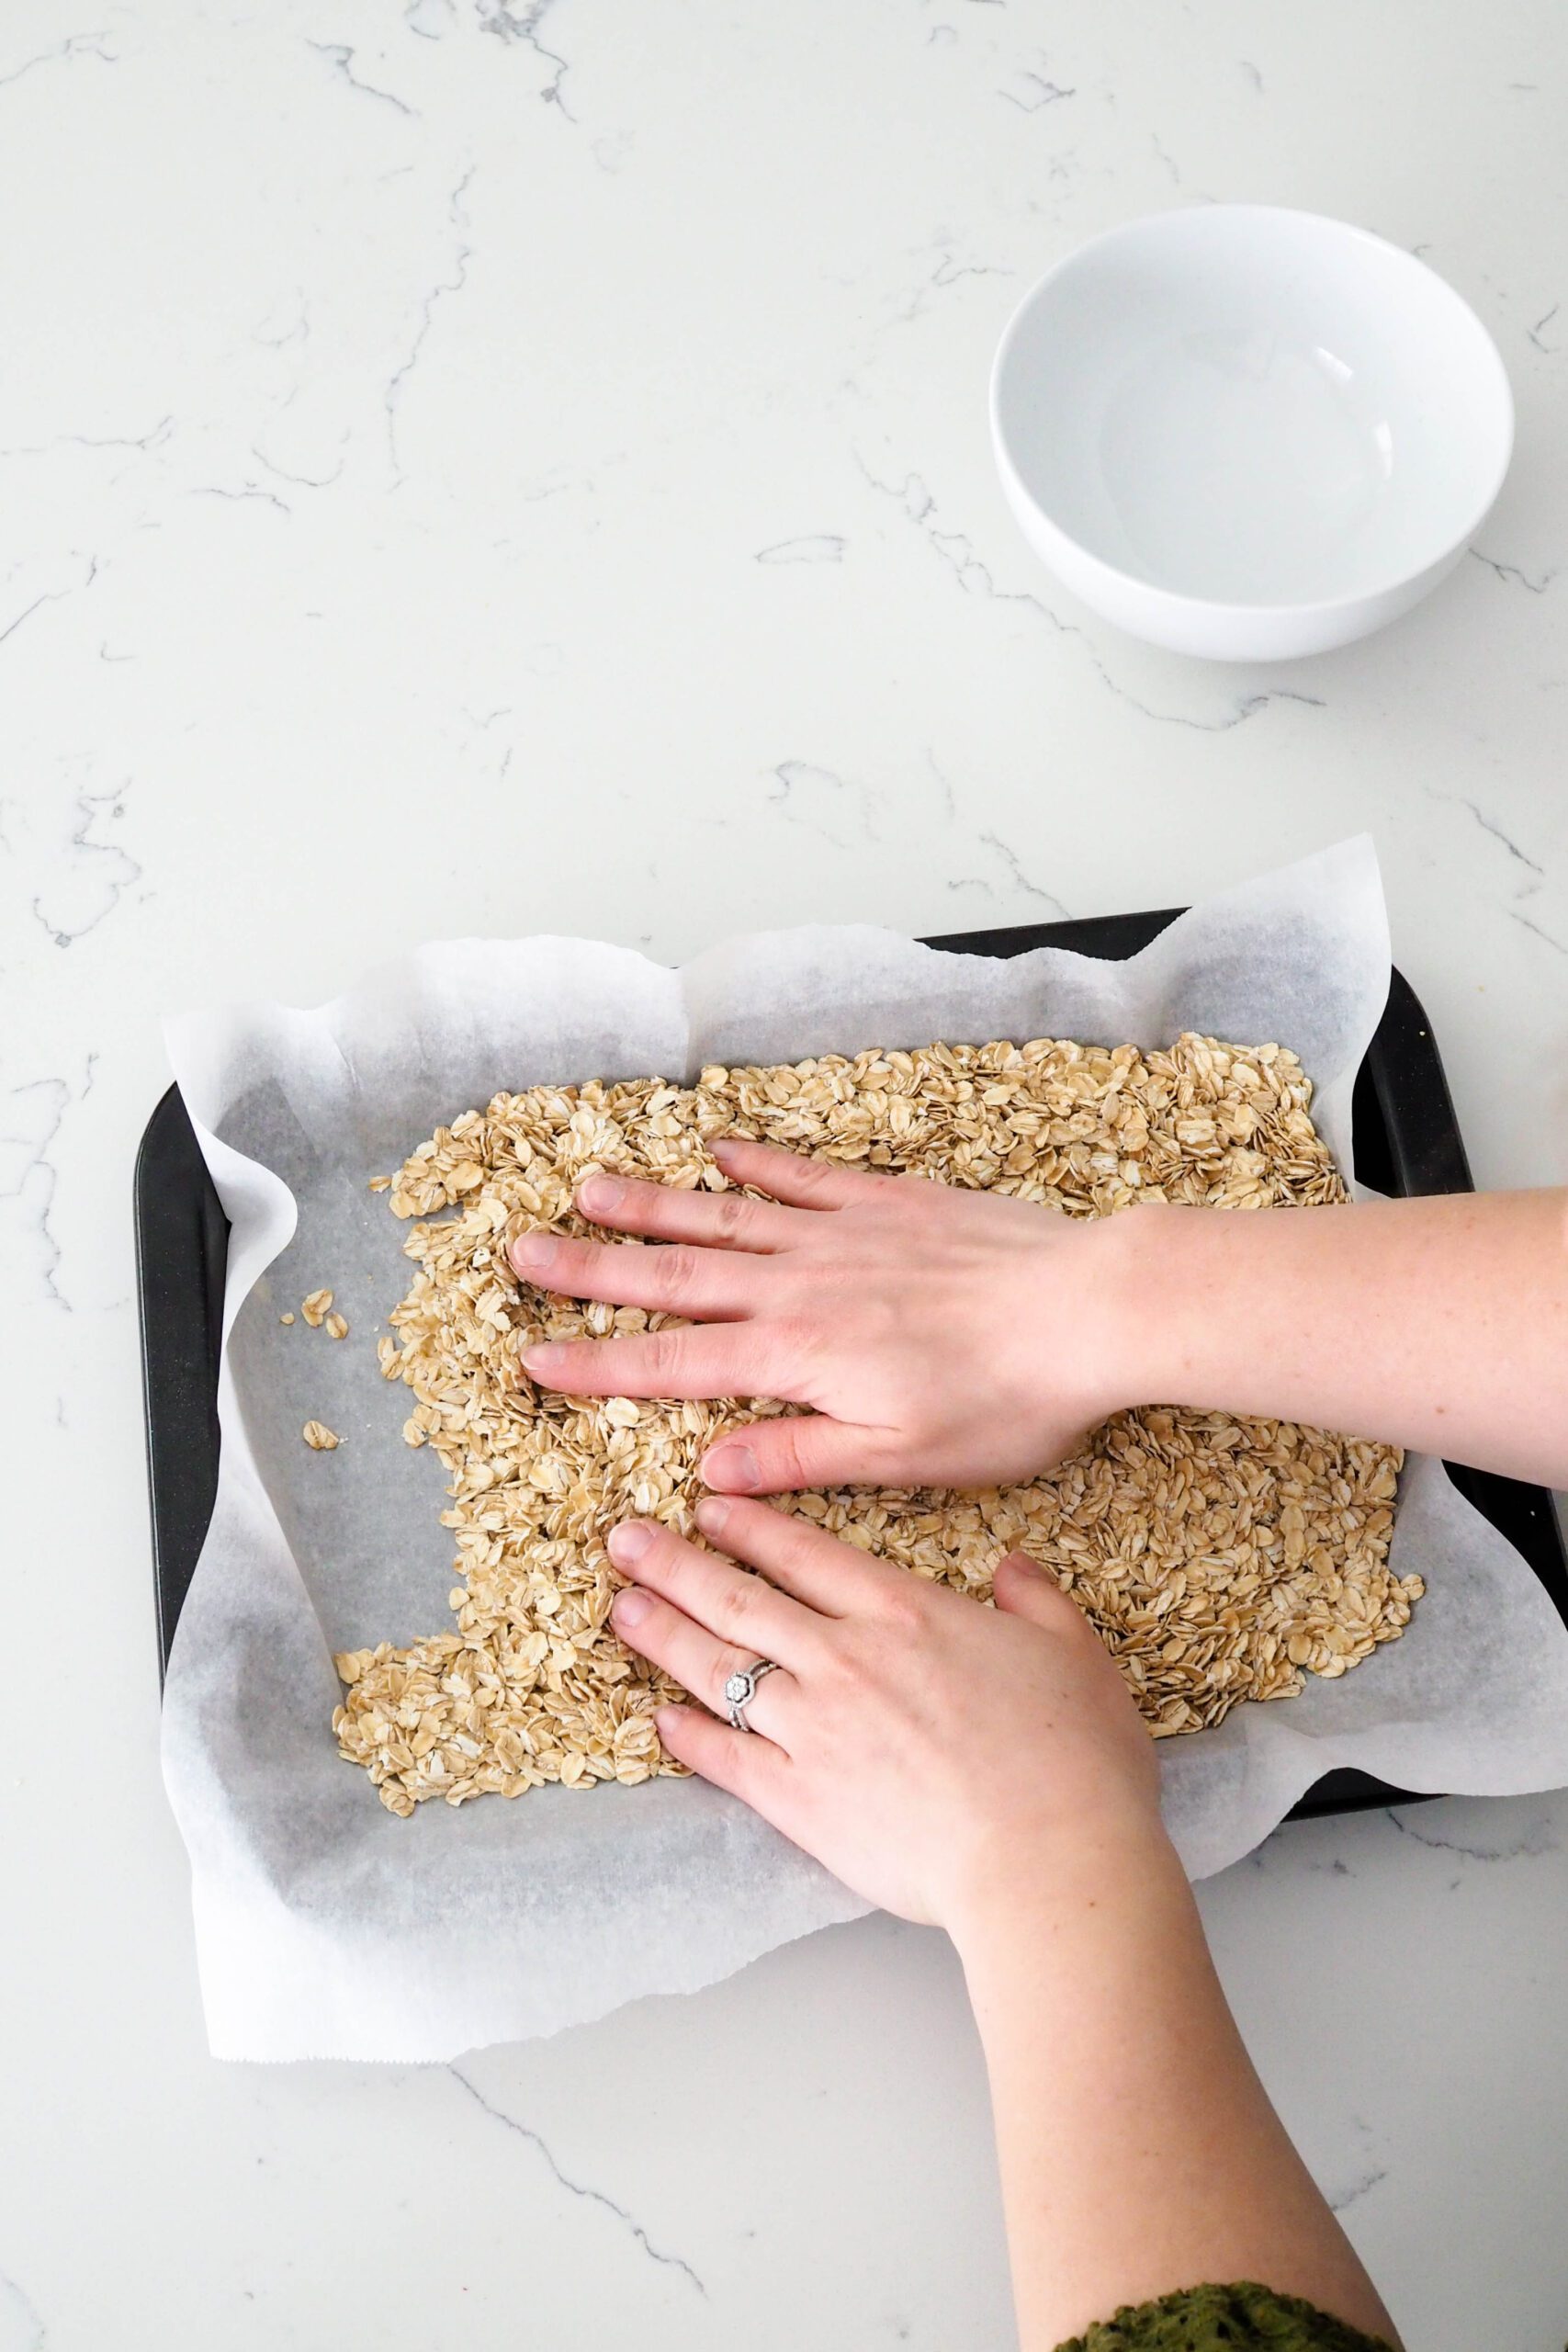 Two hands spread oats onto a baking sheet.